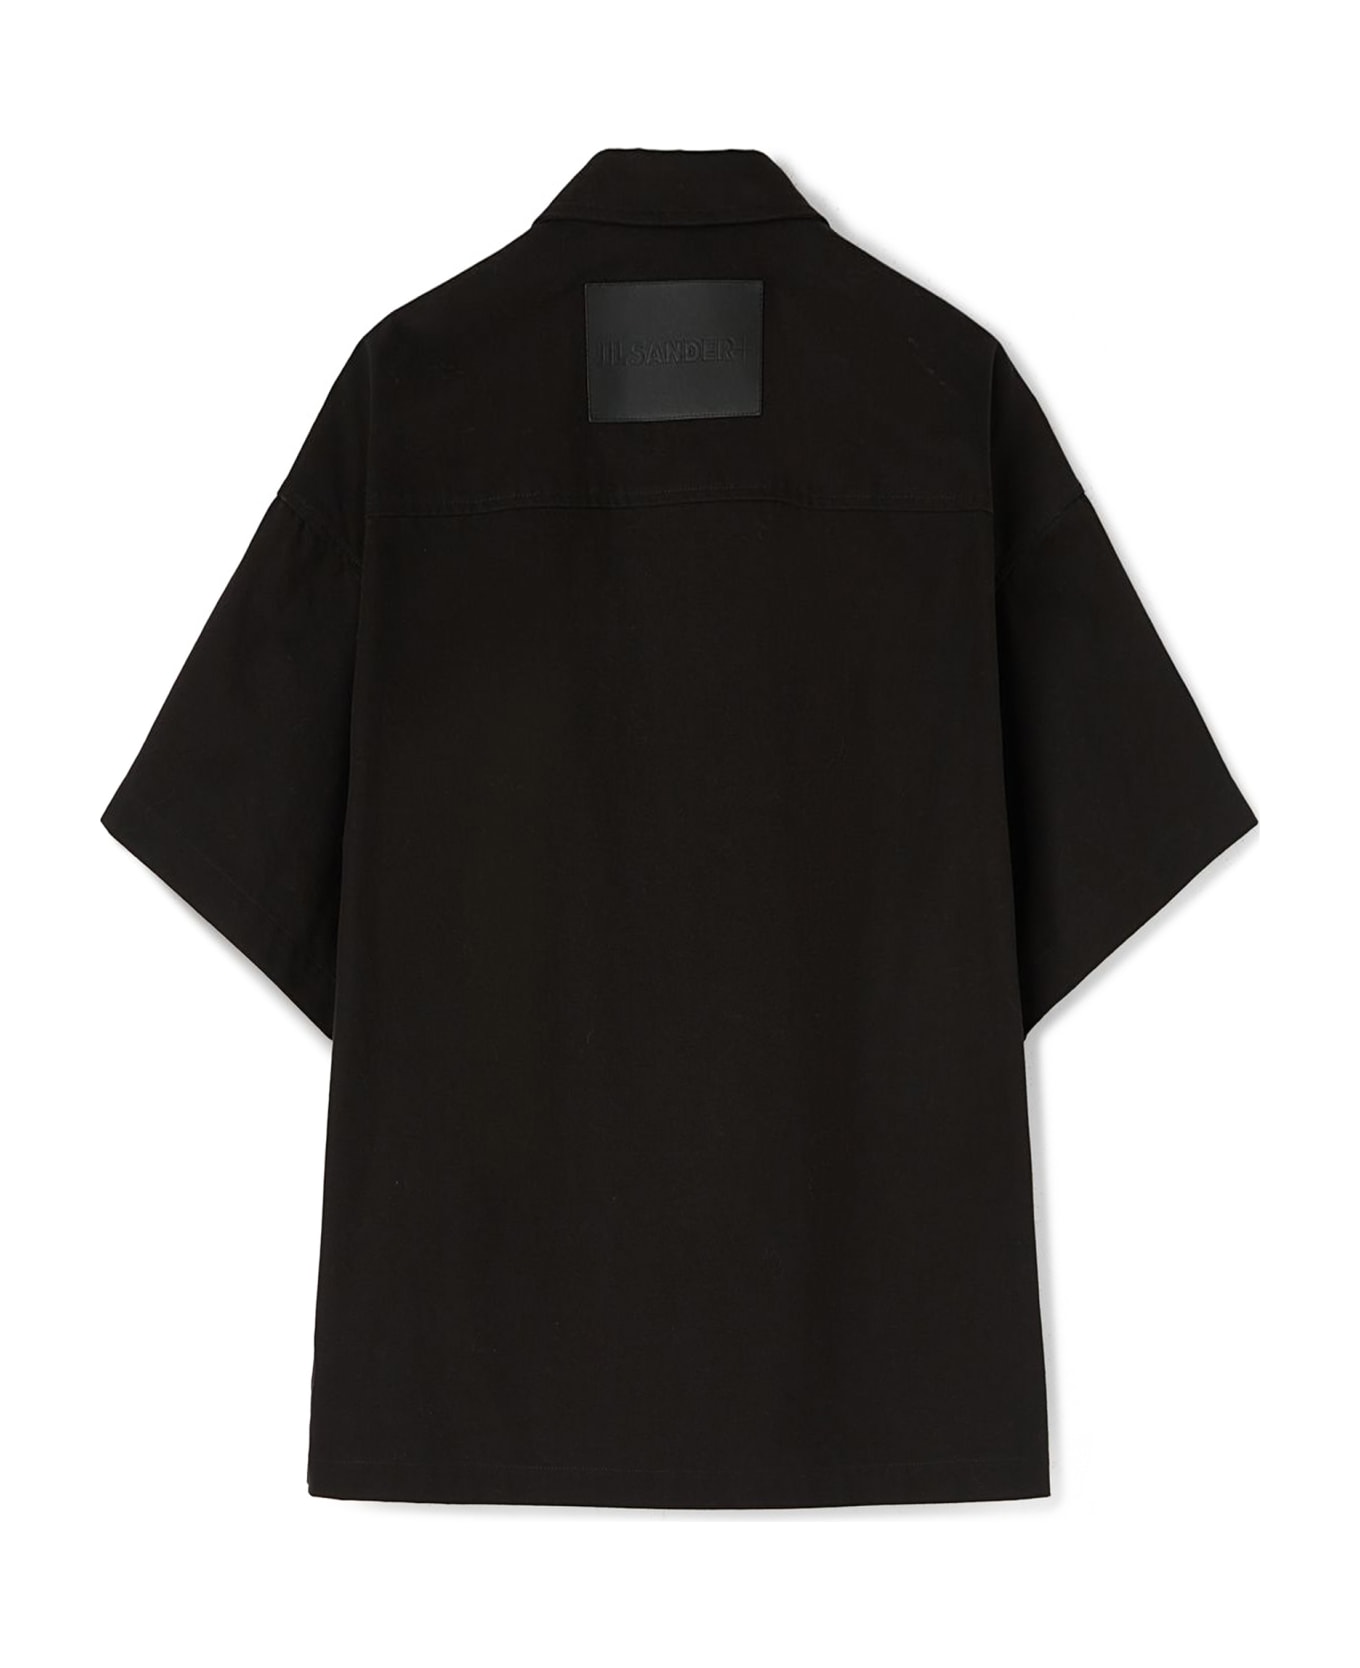 Jil Sander Black Cotton Shirt - Black